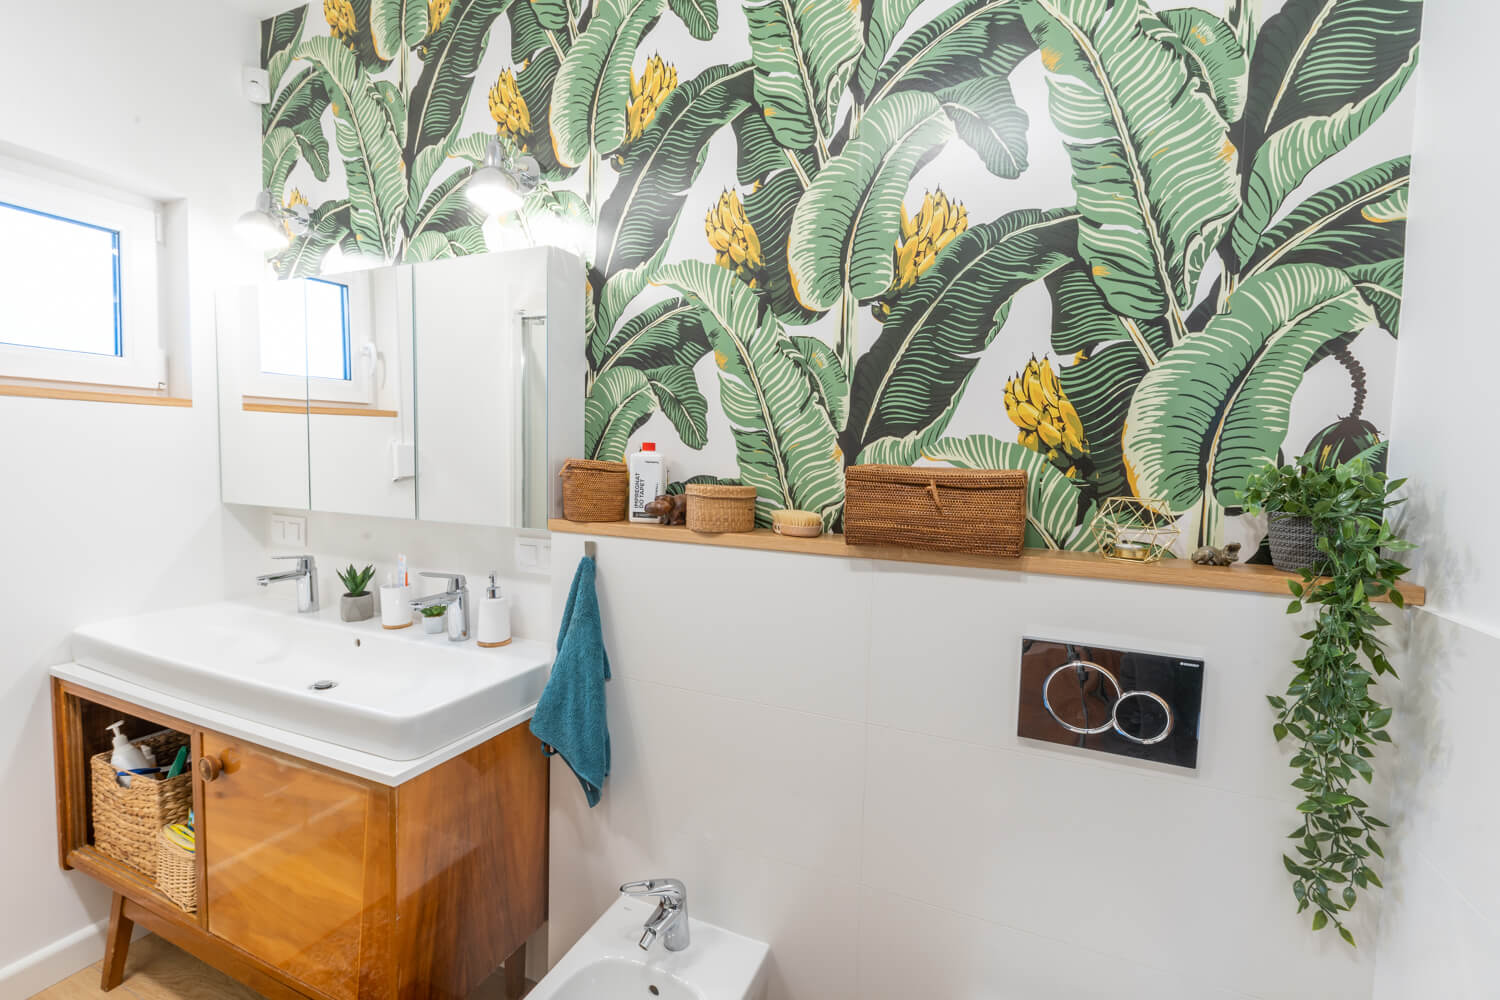 Is it a good idea to install a bathroom wallpaper?